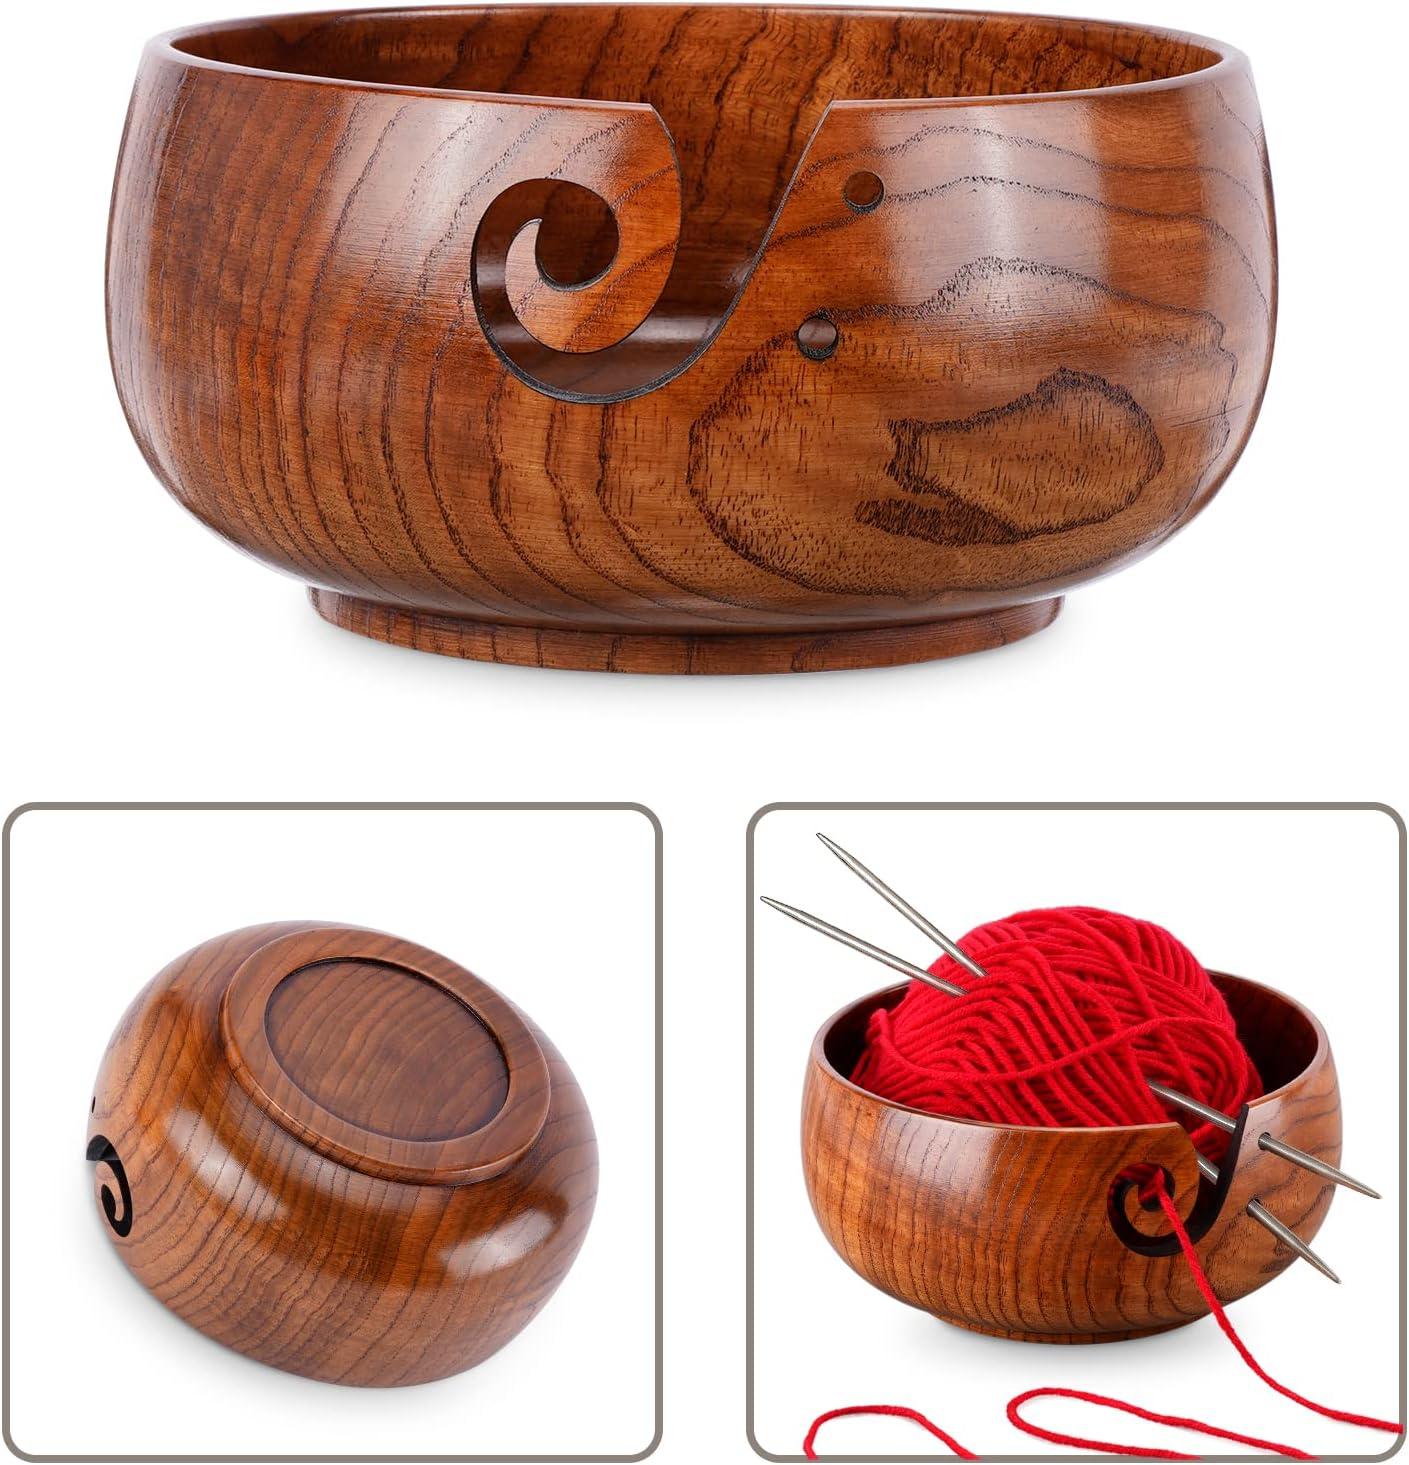 Wooden Yarn Bowl Crochet Yarn Storage Bowl Holder Crafted With